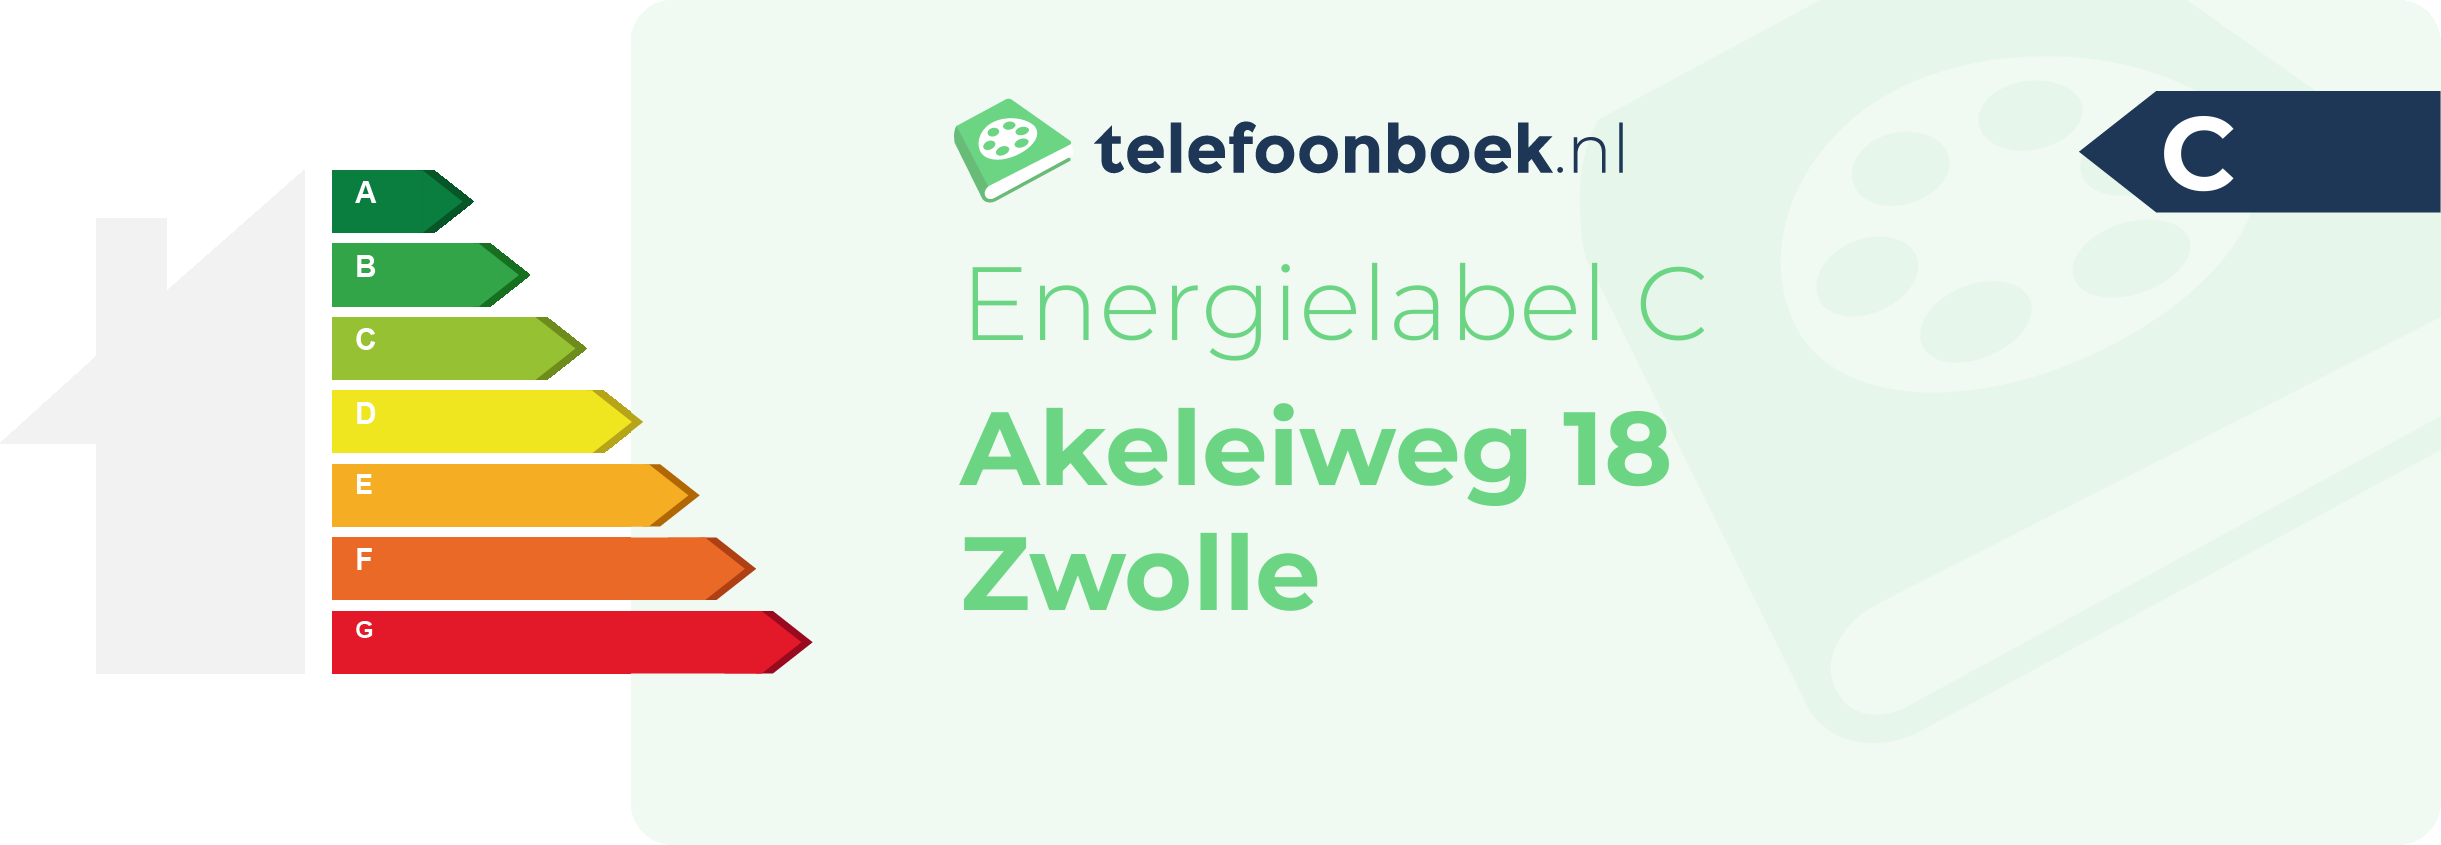 Energielabel Akeleiweg 18 Zwolle